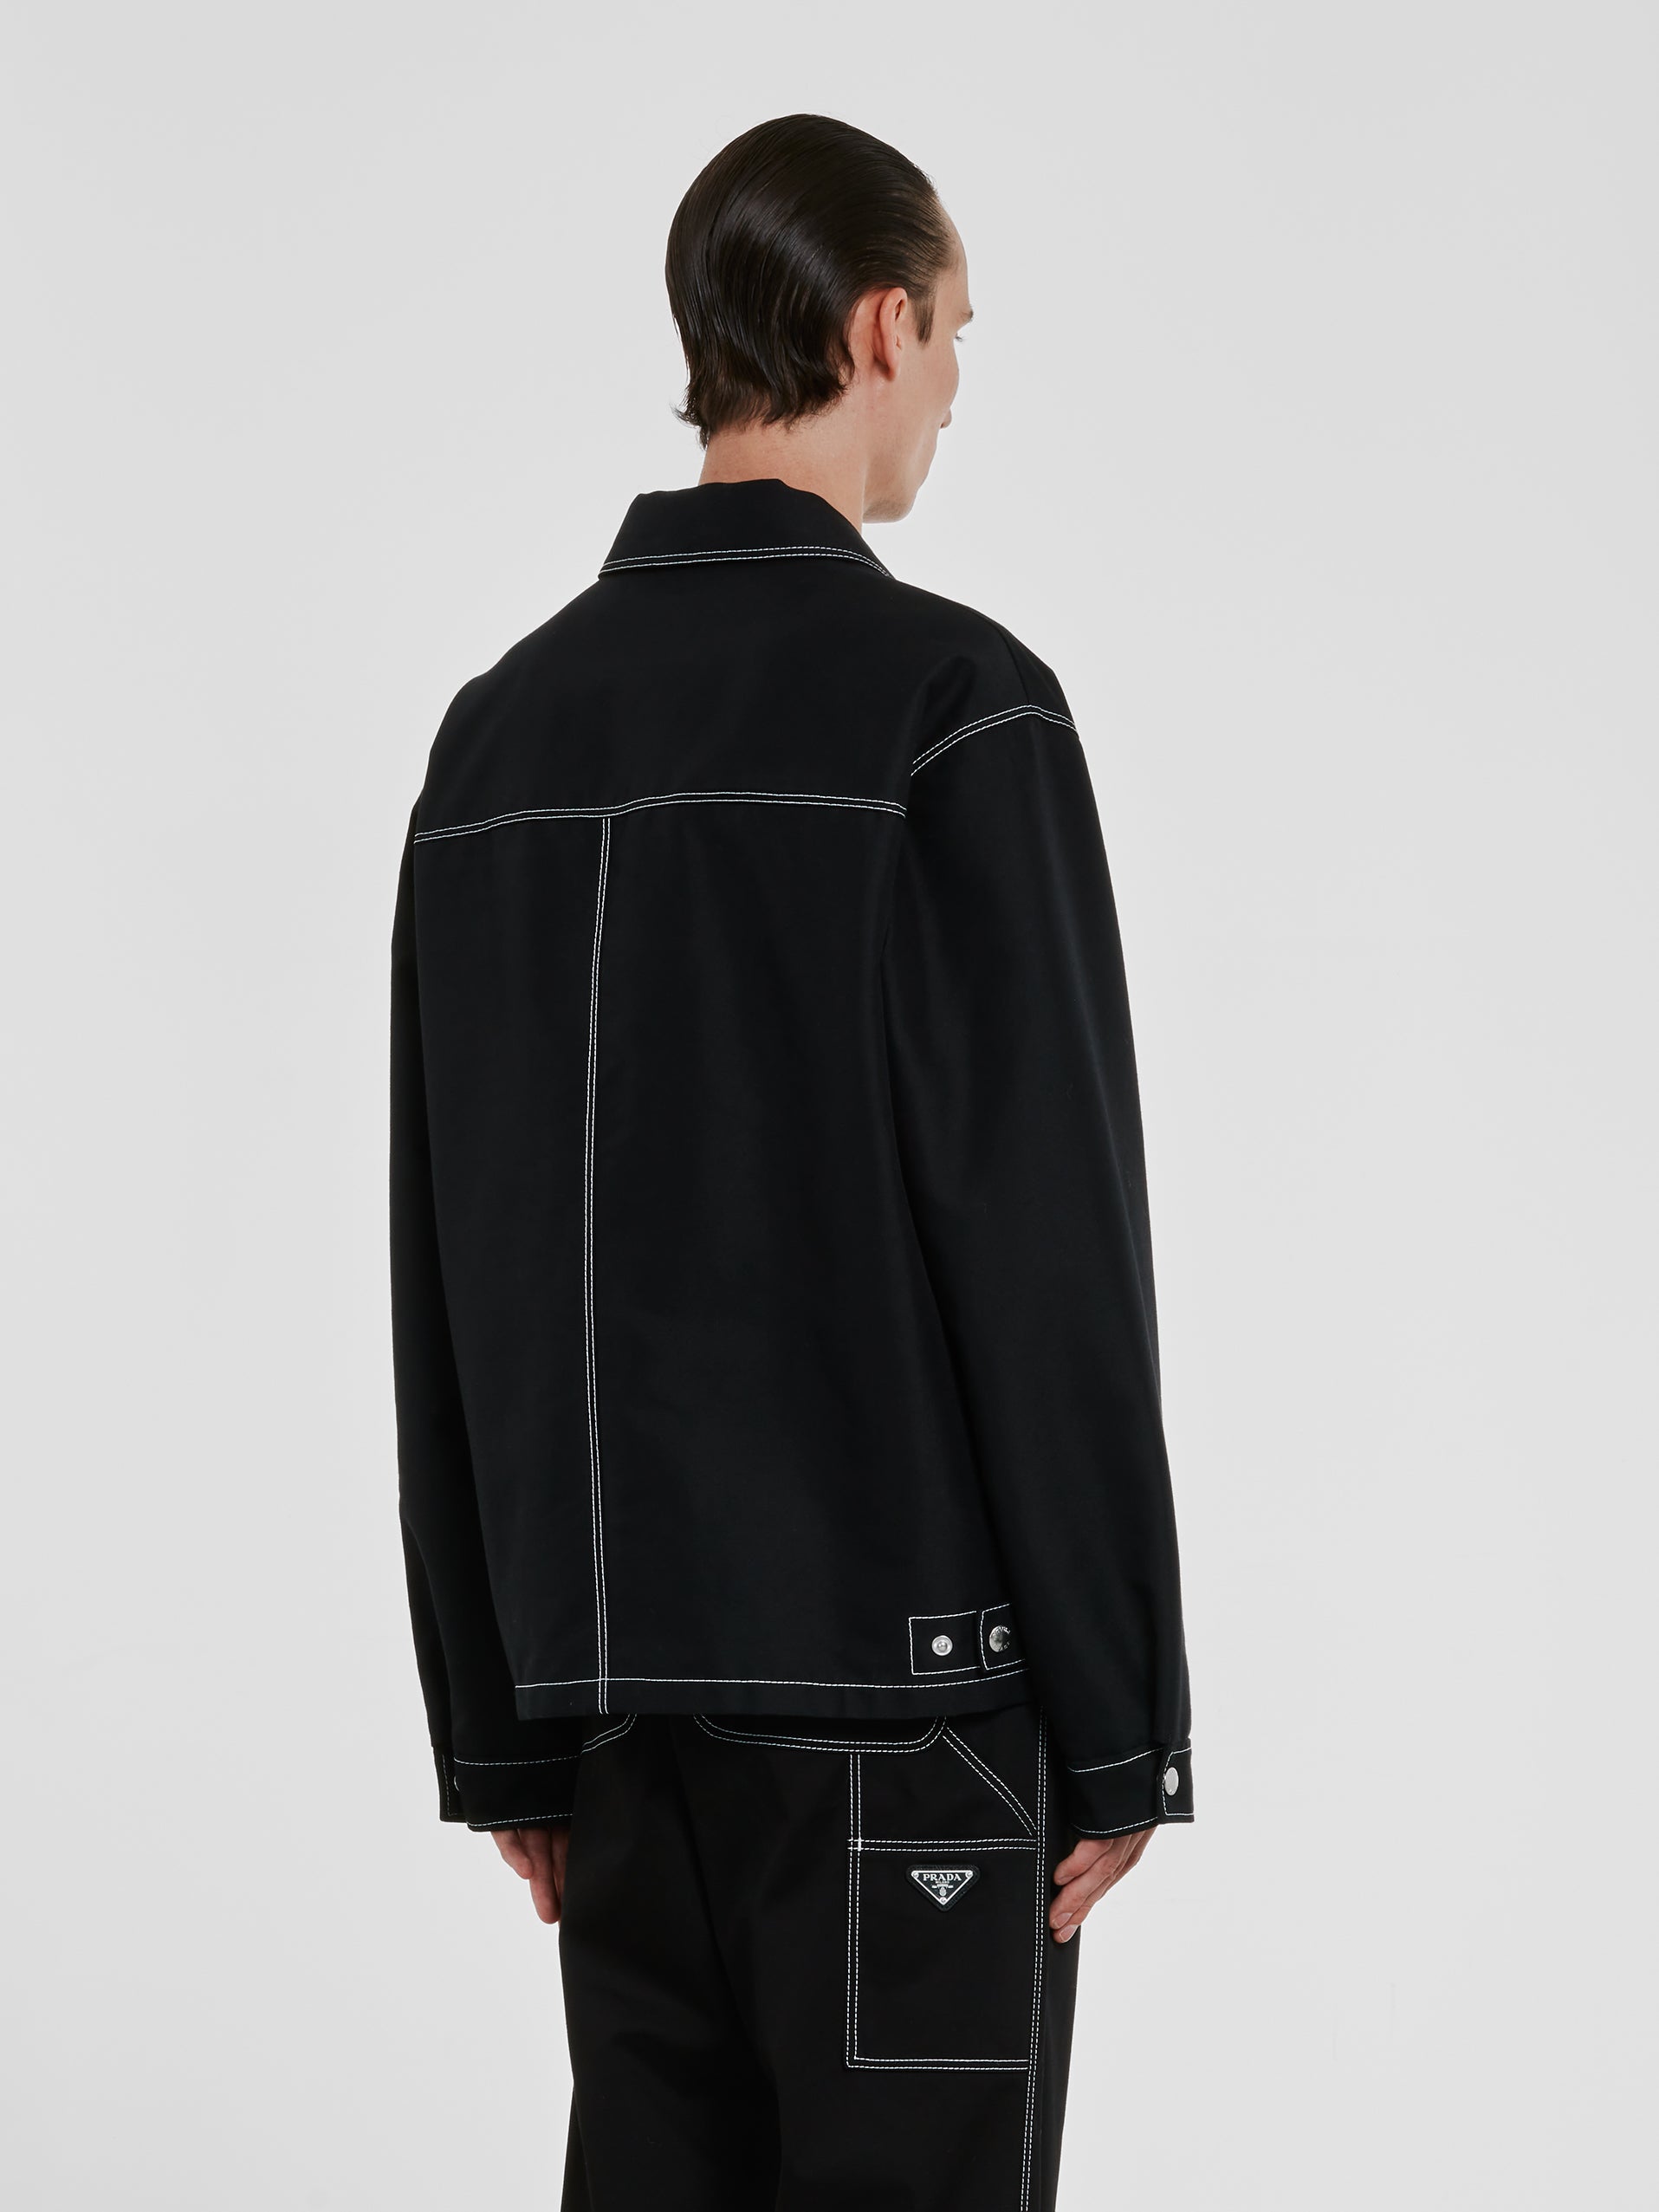 Prada - Men’s Contrast Stitch Jacket - (Black) view 3